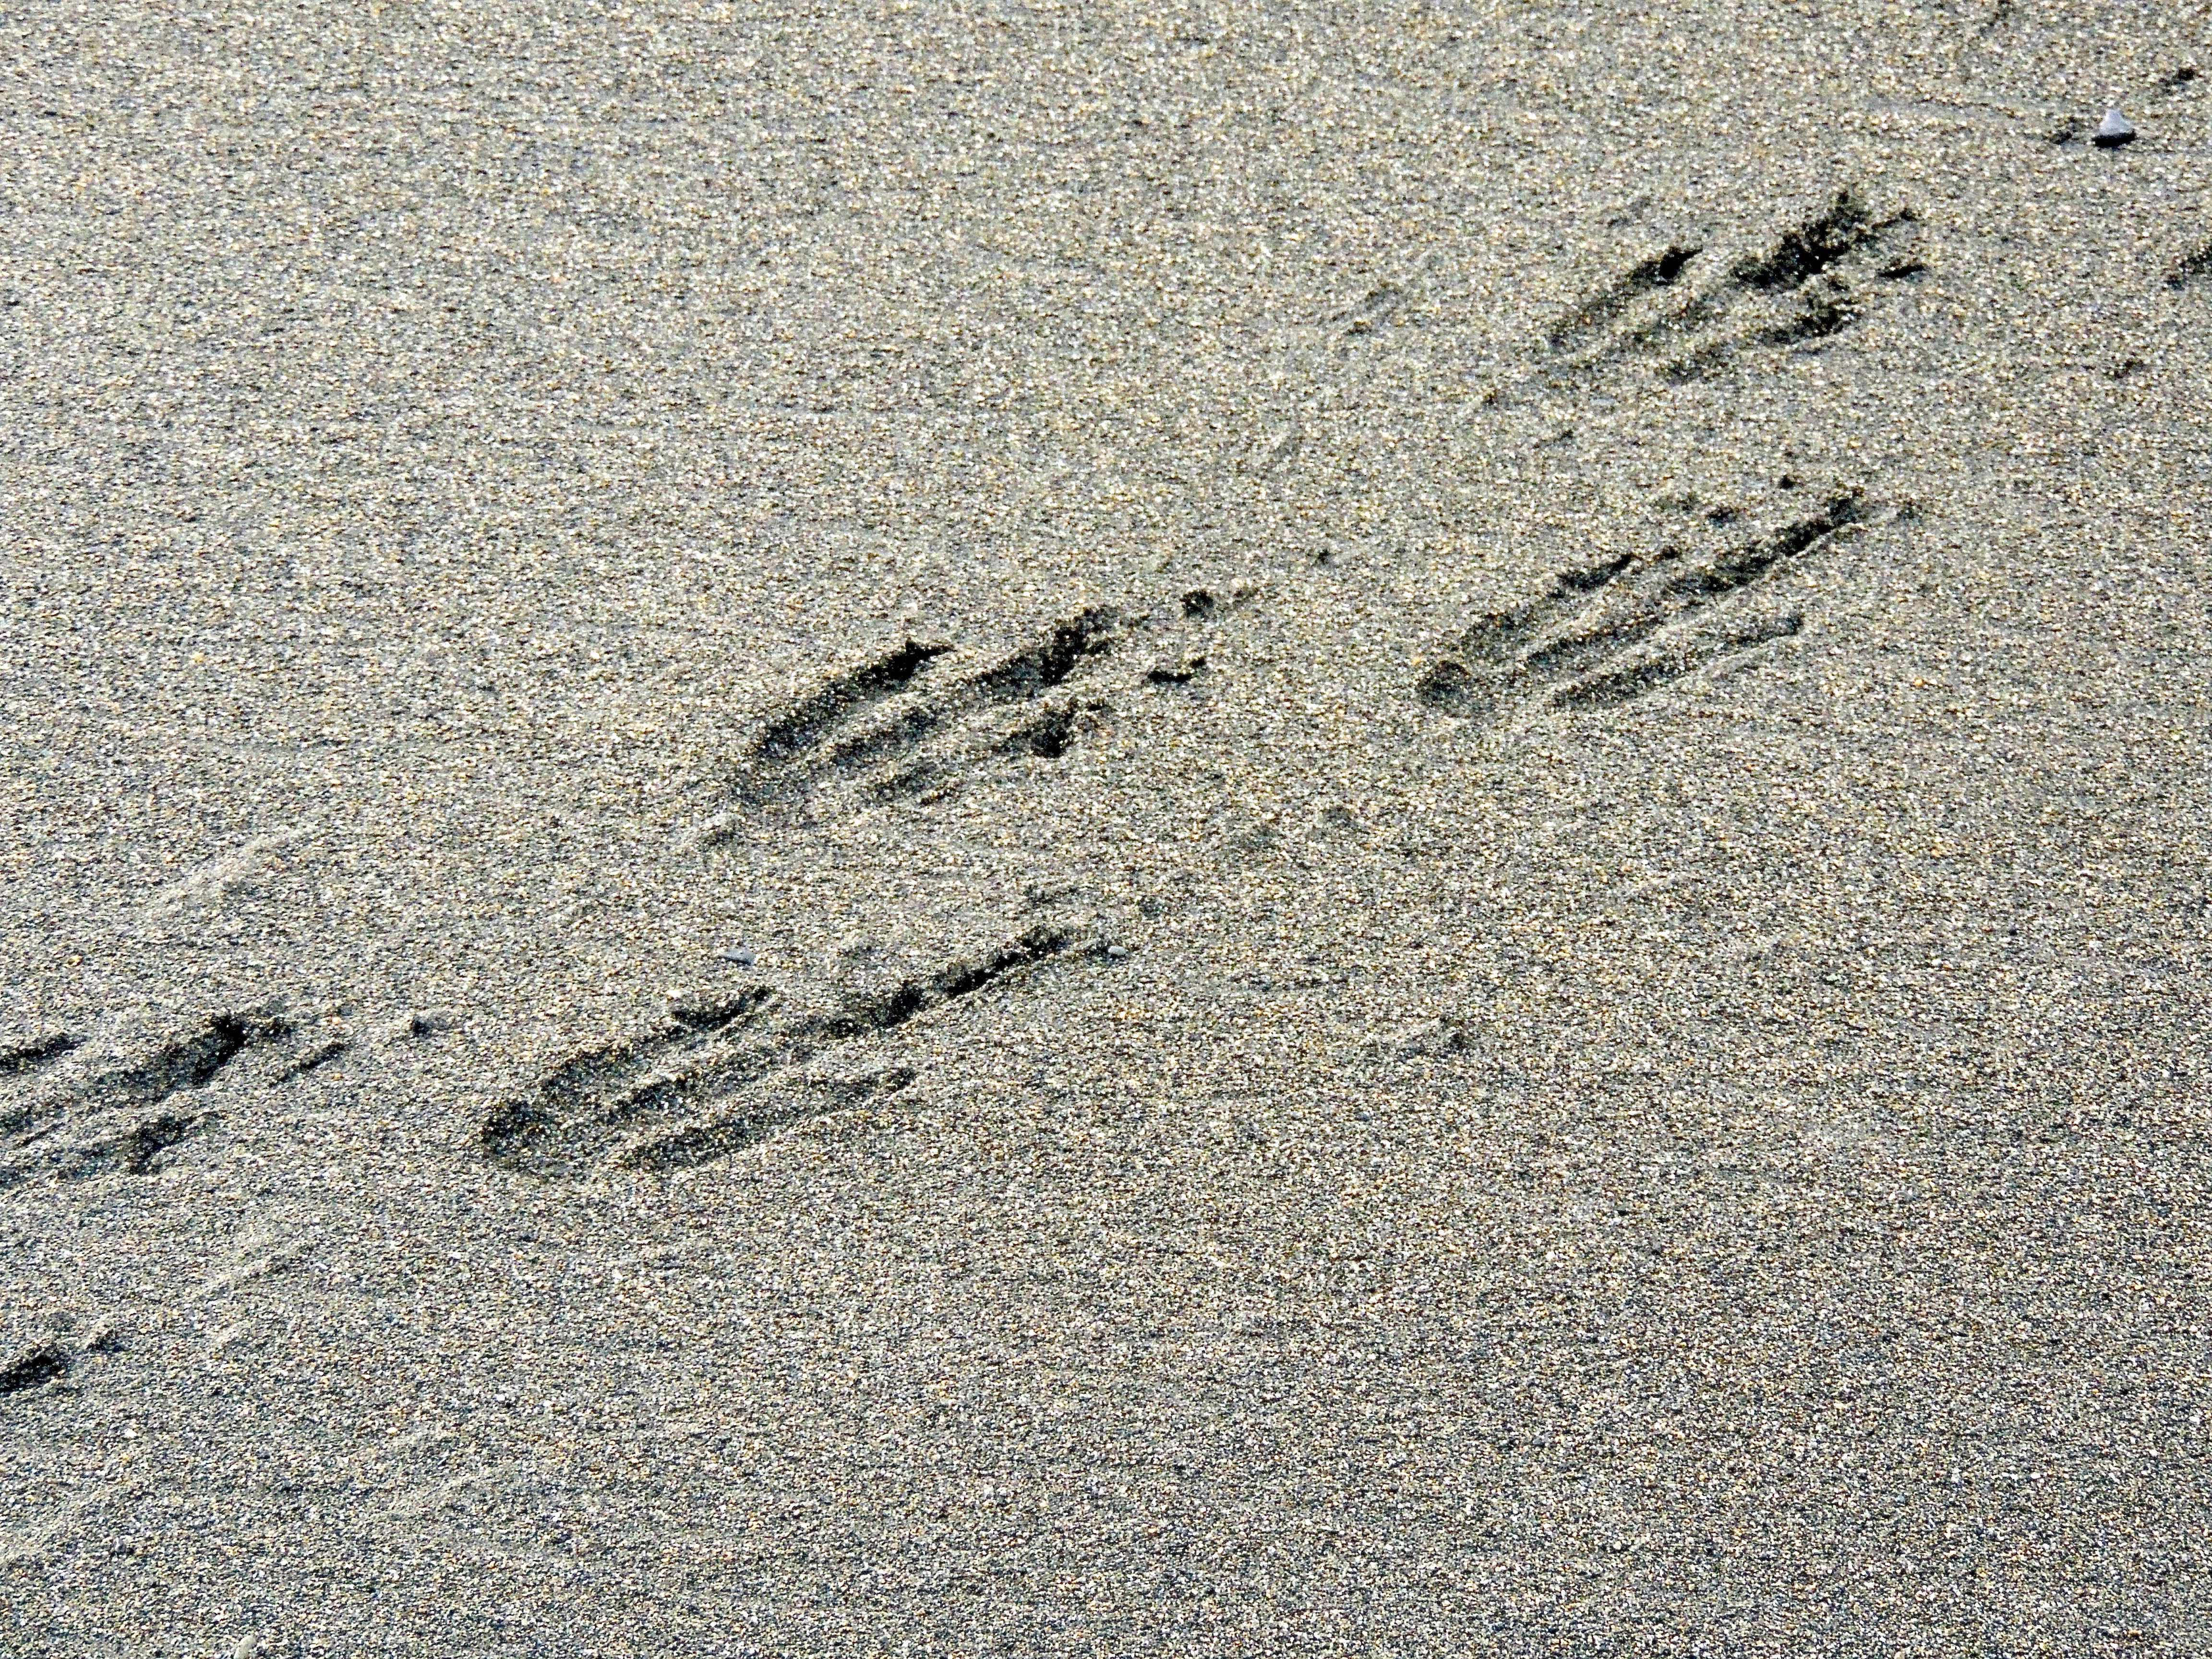 King Penguin Footprints